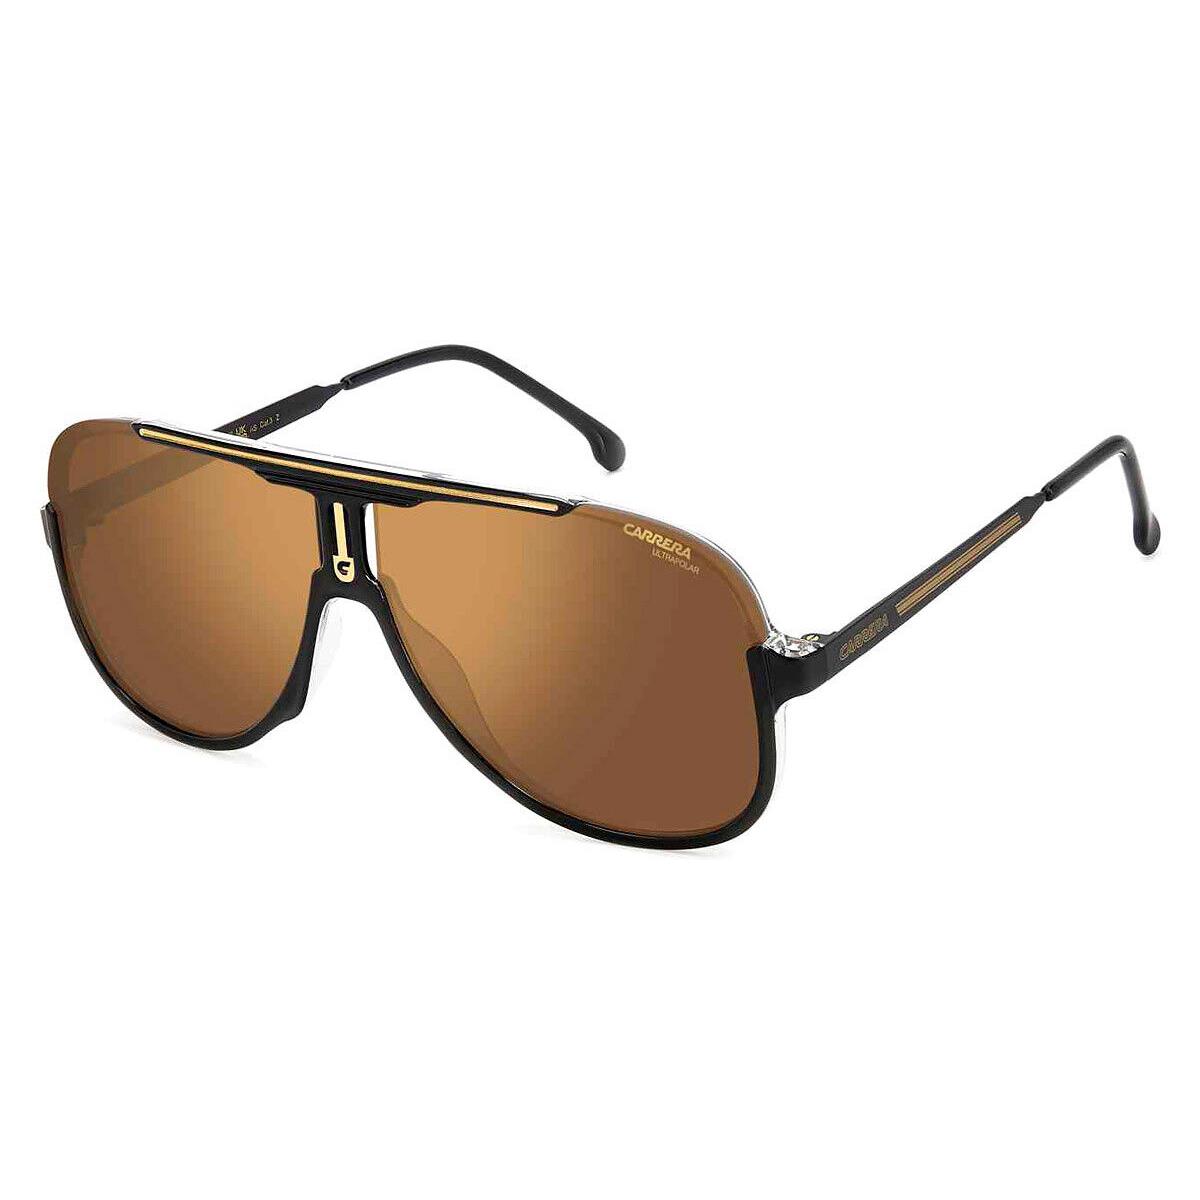 Carrera Car Sunglasses Black Brown / Gold HC Polarized AR